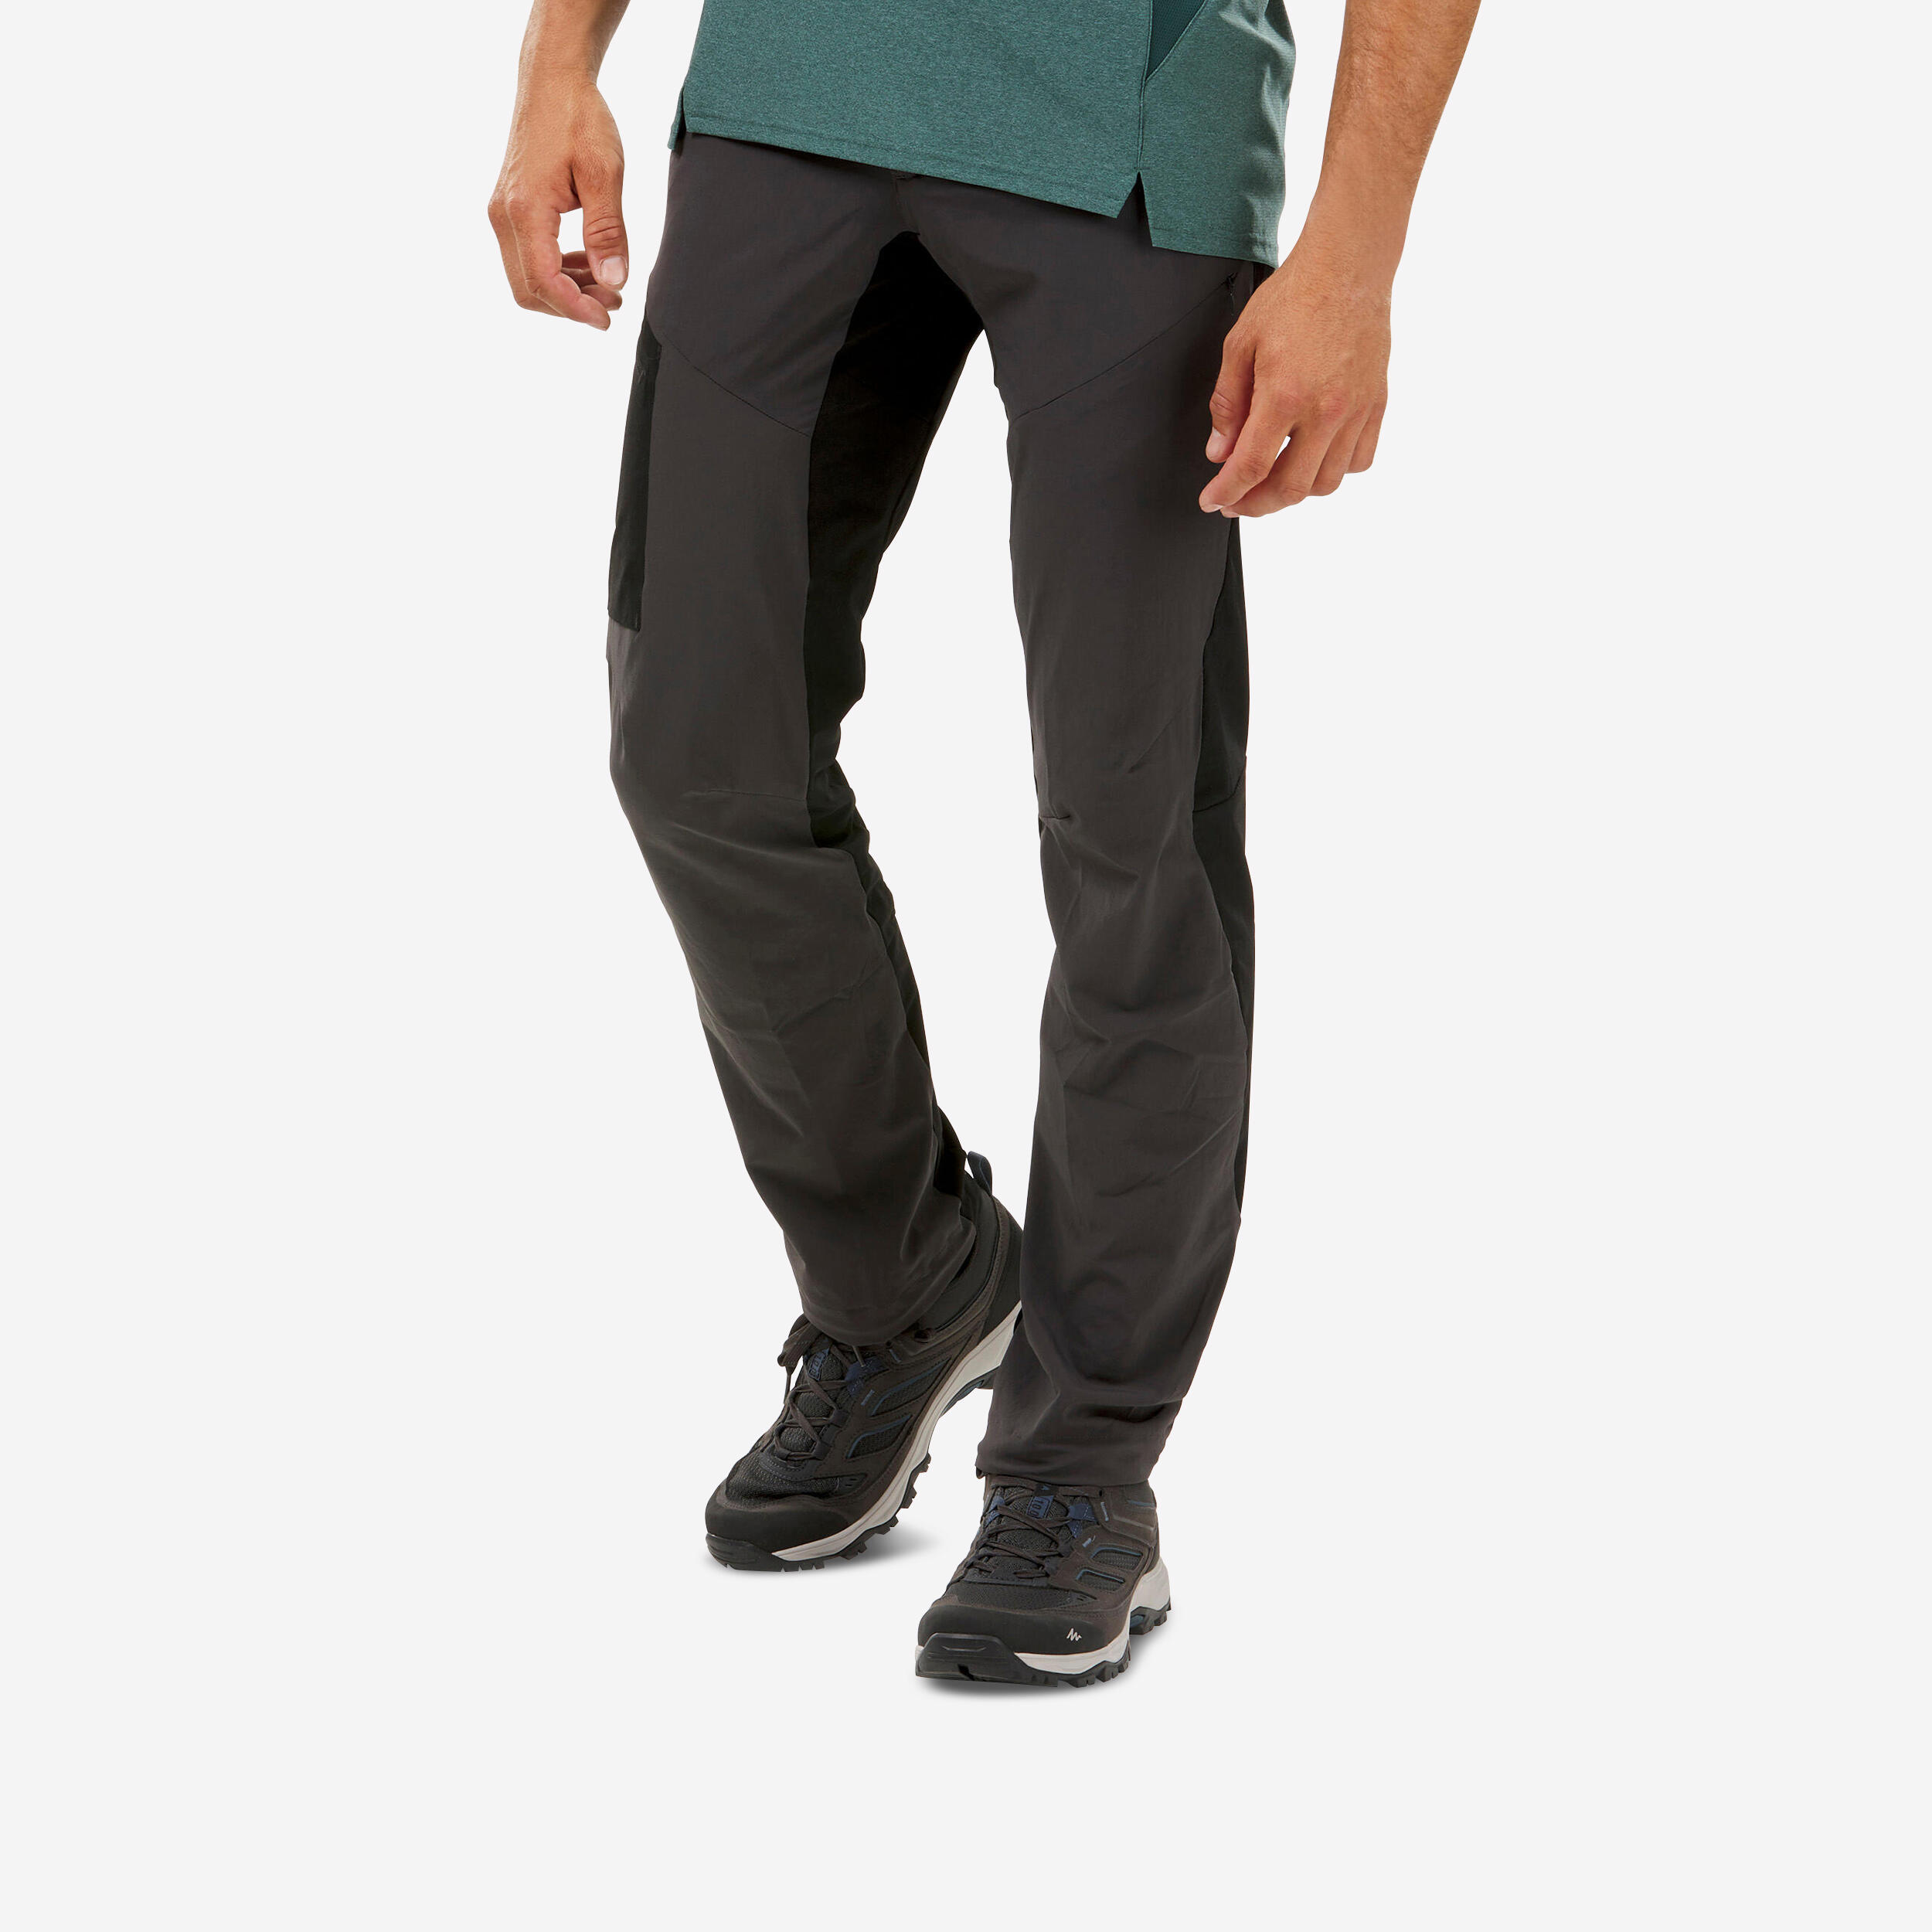 Men's Breathable Warm Pants - SH 500 Grey - Carbon grey